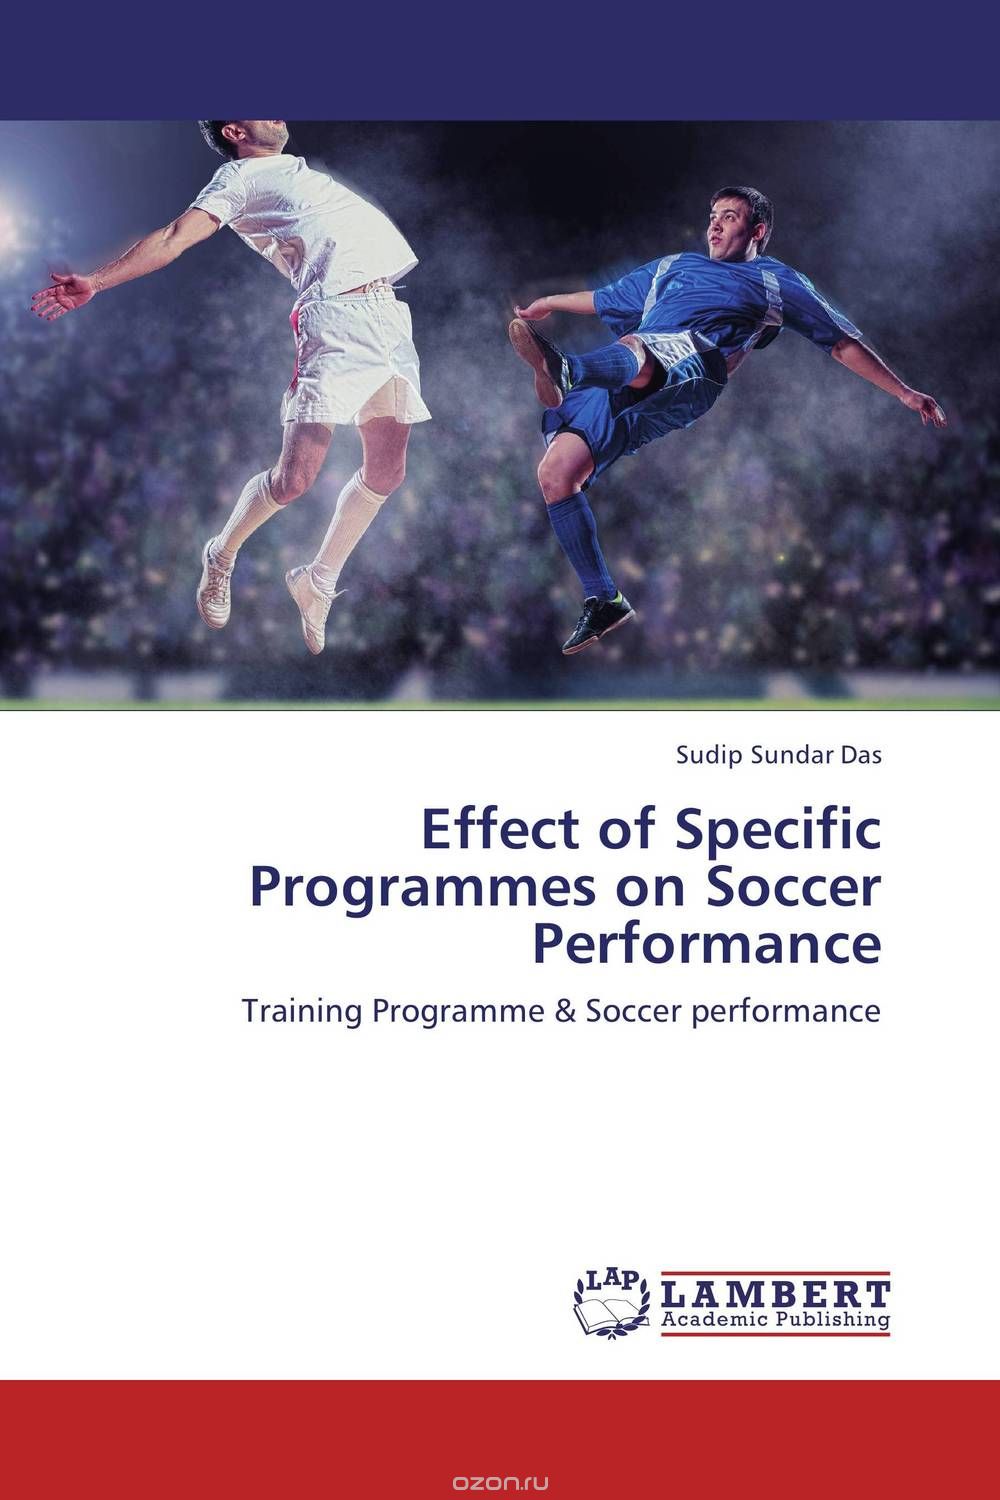 Скачать книгу "Effect of Specific Programmes on Soccer Performance"